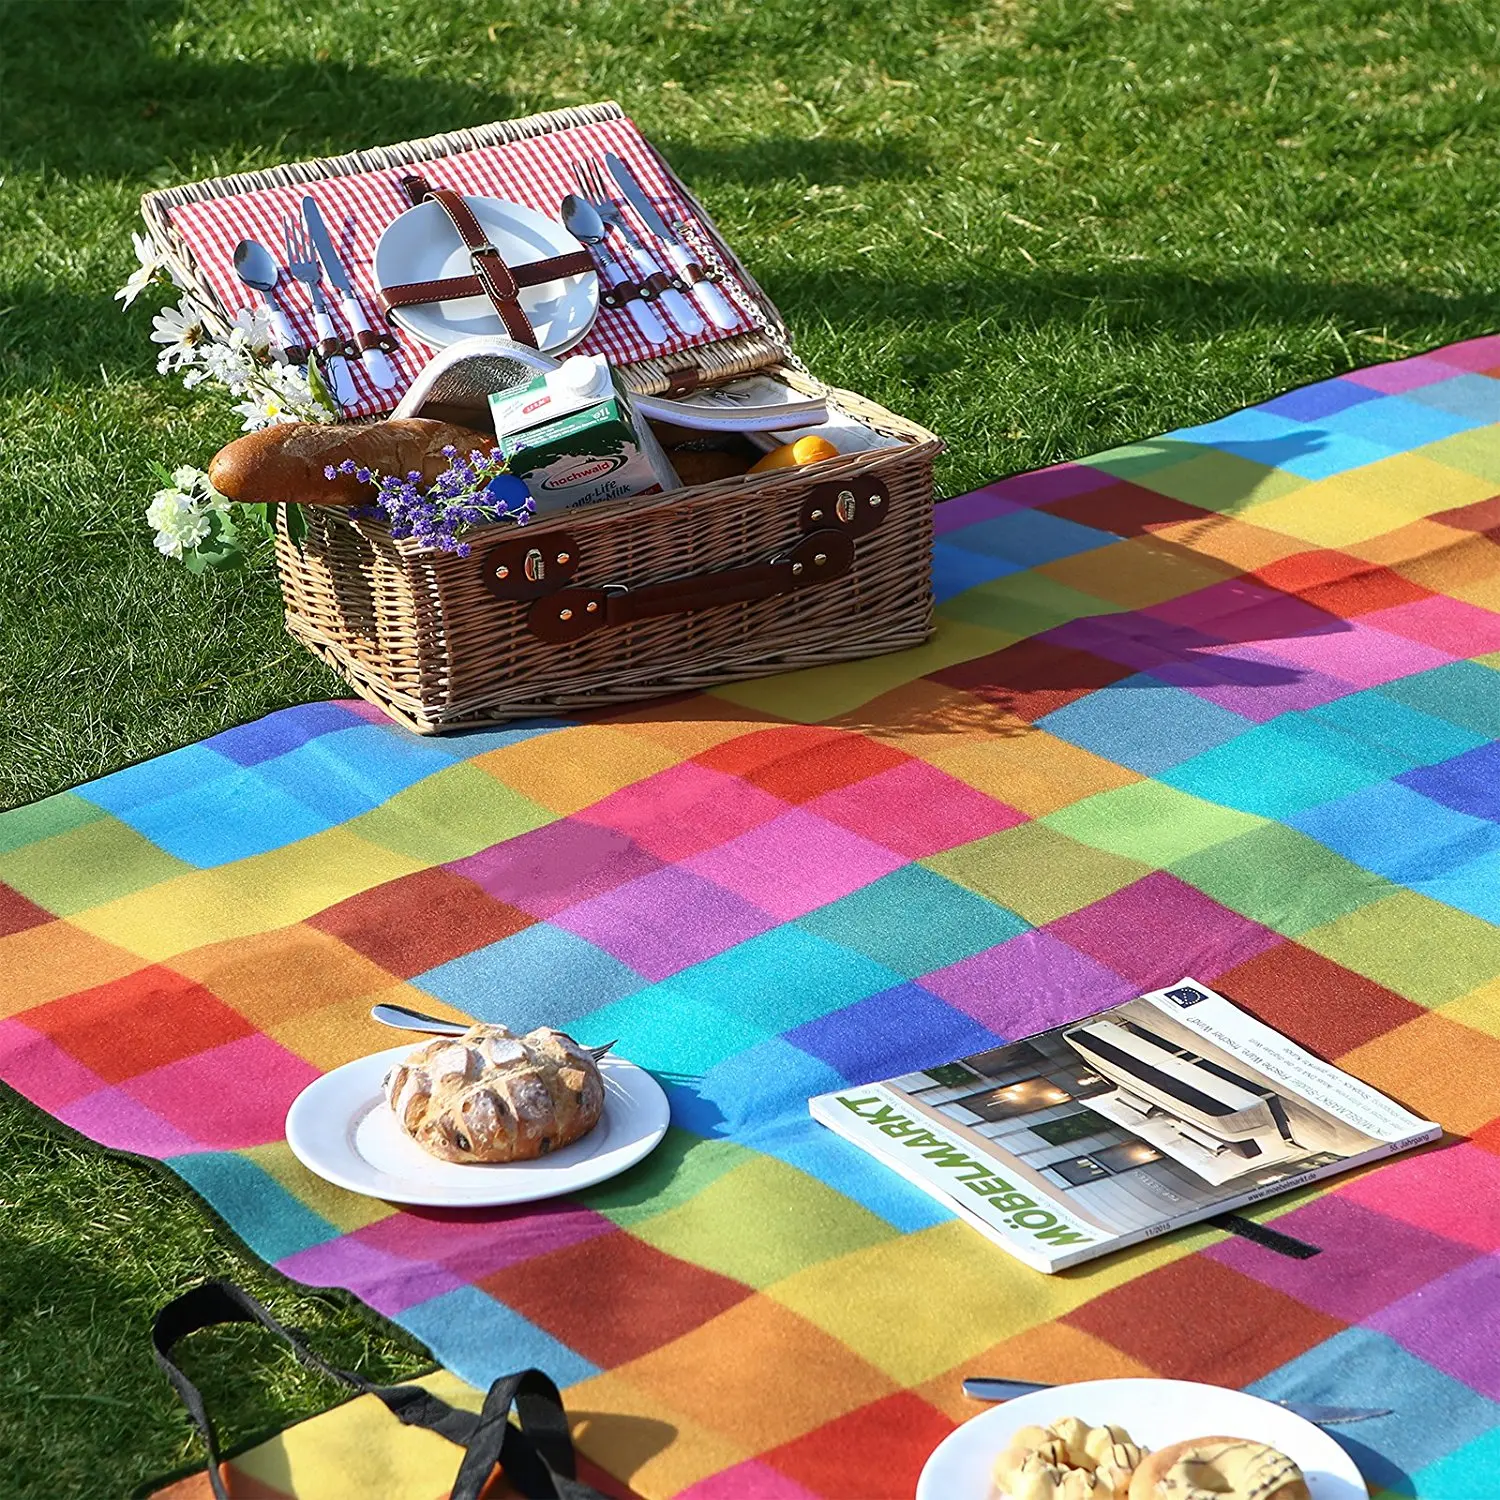 large picnic blanket